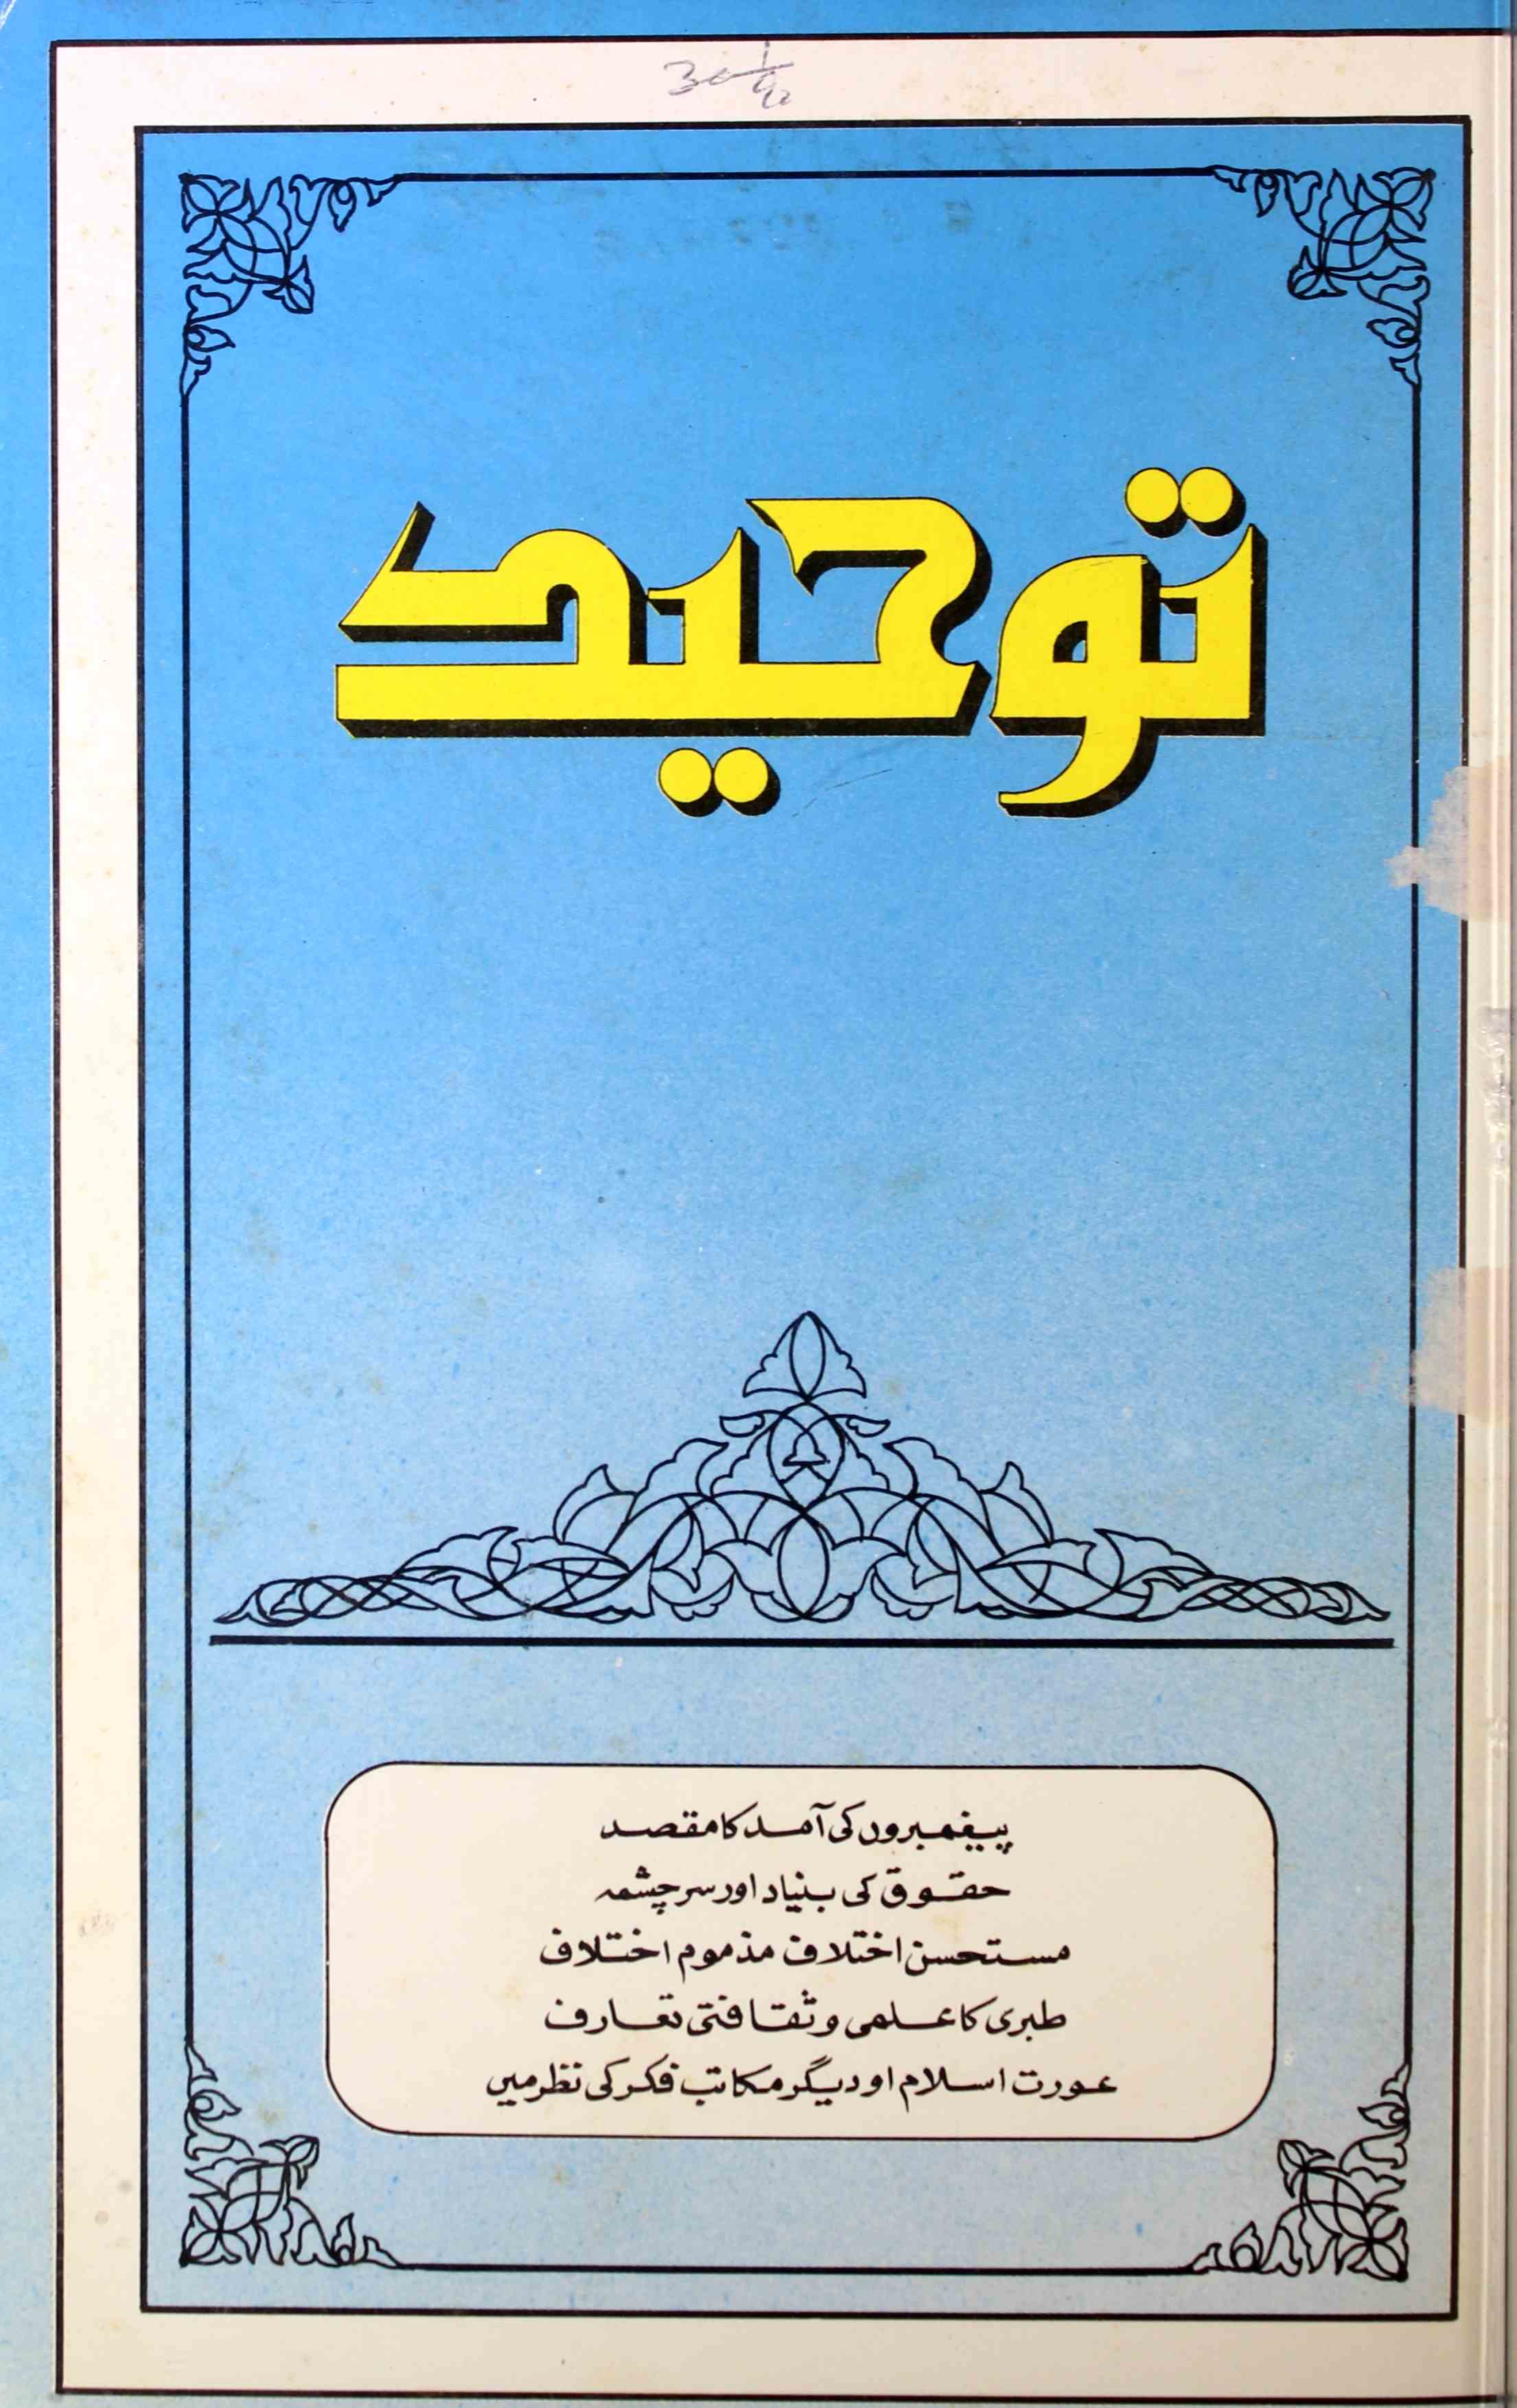 Toheed Jild 7 Shumara 1  Dec 1989 - Jan 1990